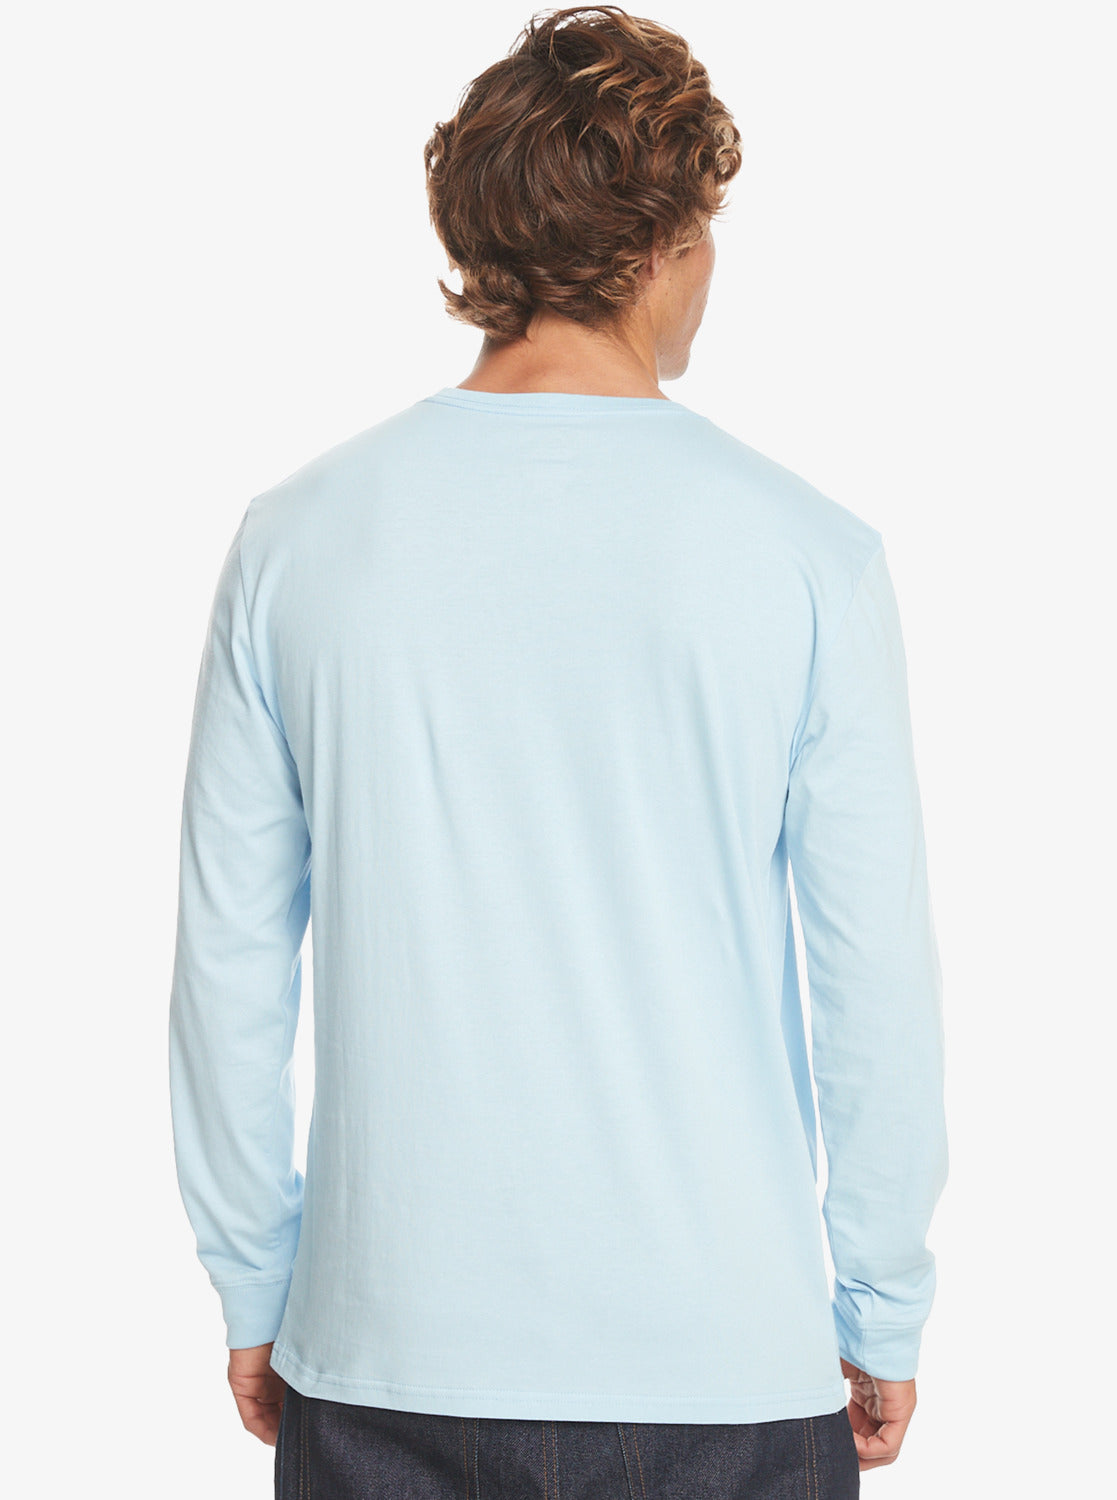 QUIKSILVER Omni Logo - Long Sleeve T-Shirt for Men